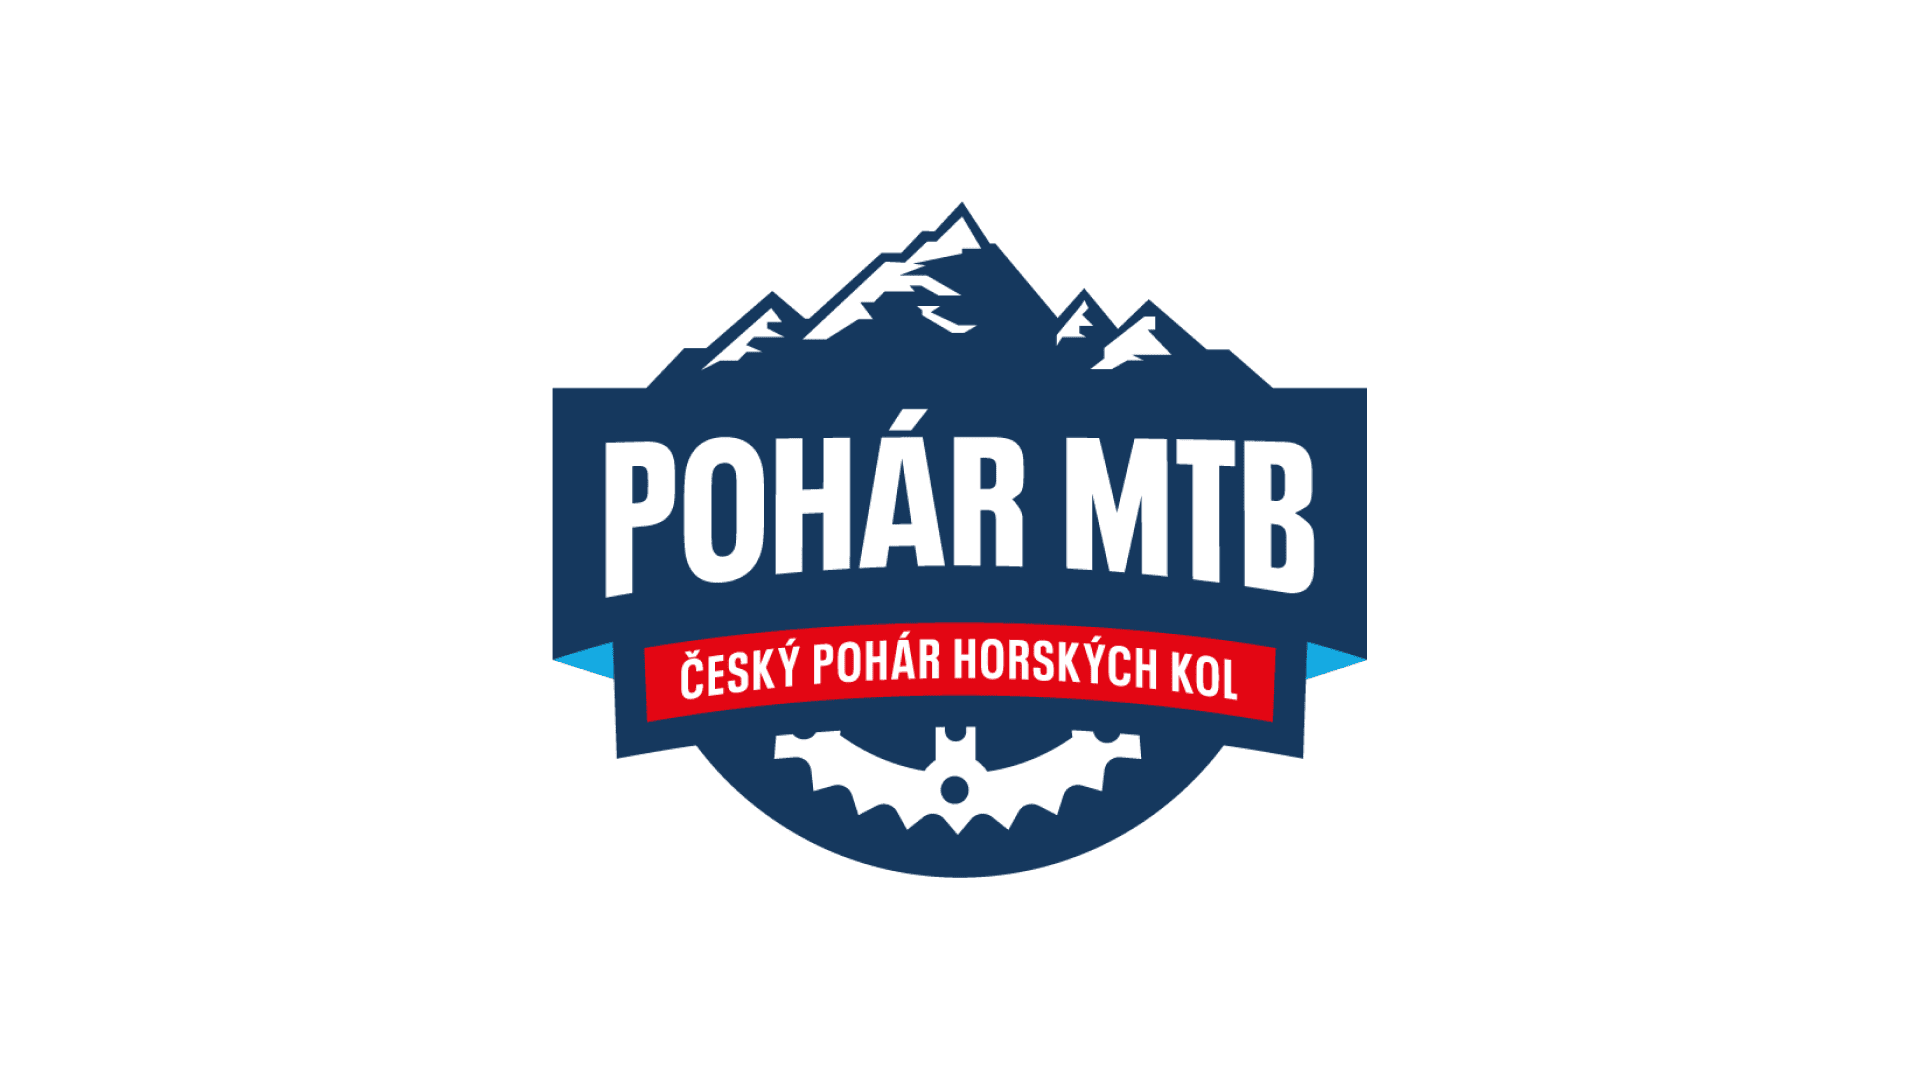 (c) Poharmtb.cz